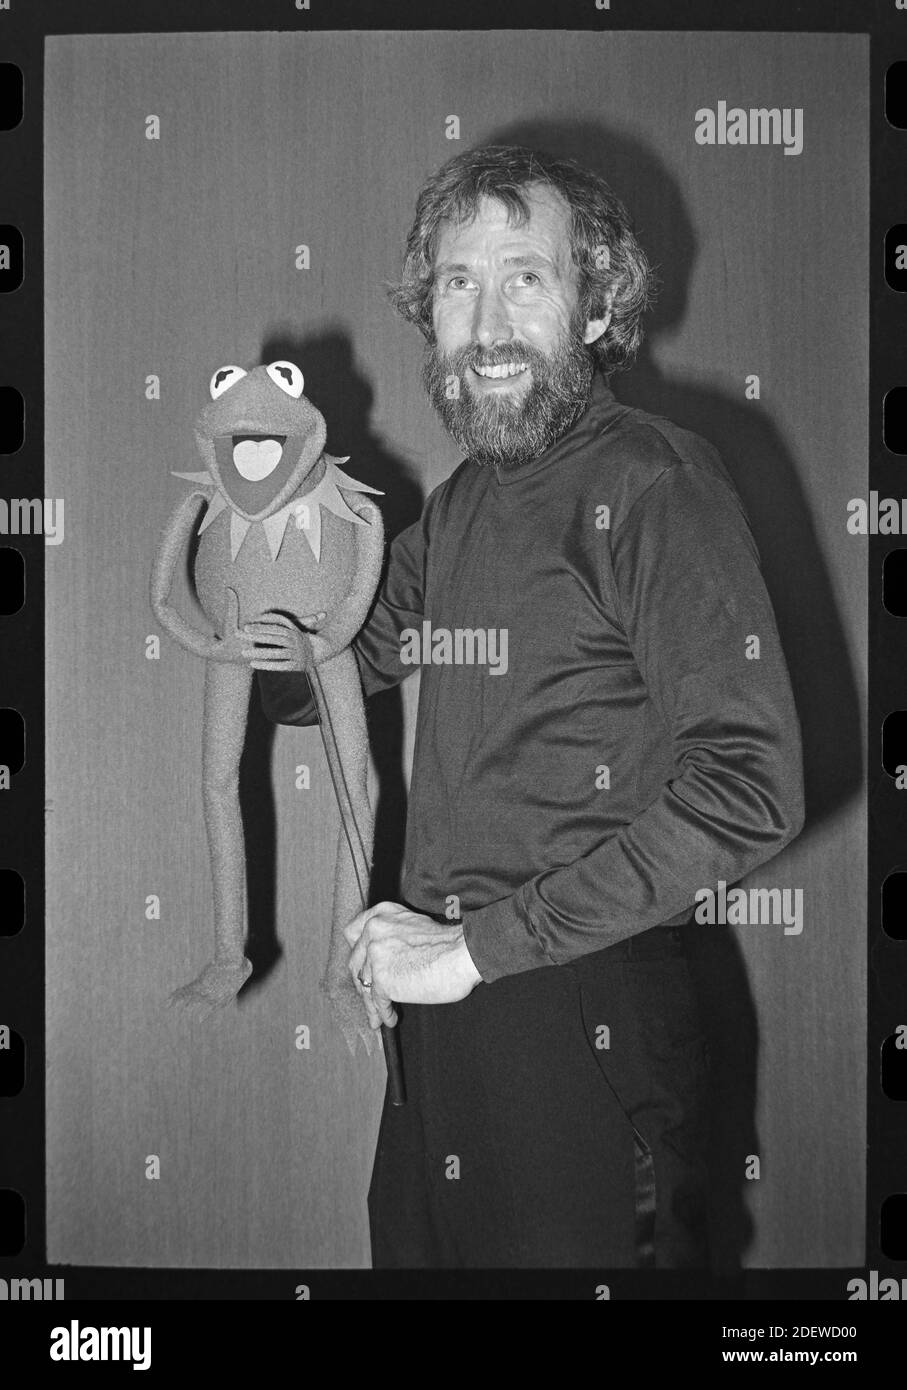 Puppeteer Jim Henson e Kermit The Frog, Pasadena, California. 29 gennaio 1984. Immagine da negativo 35 mm. Foto Stock